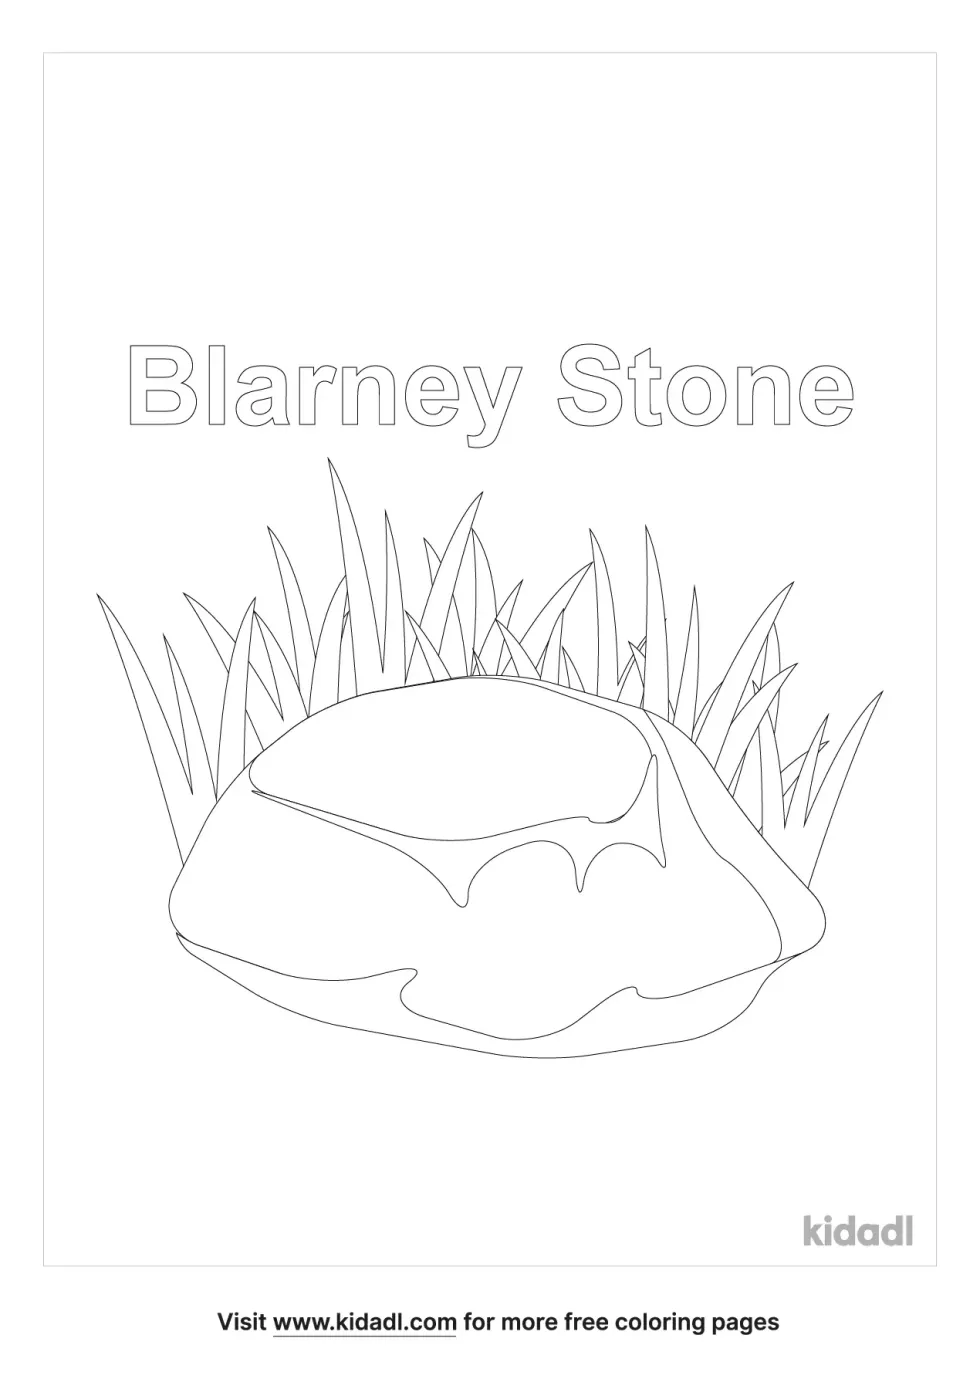 Ireland Of The Blarney Stone